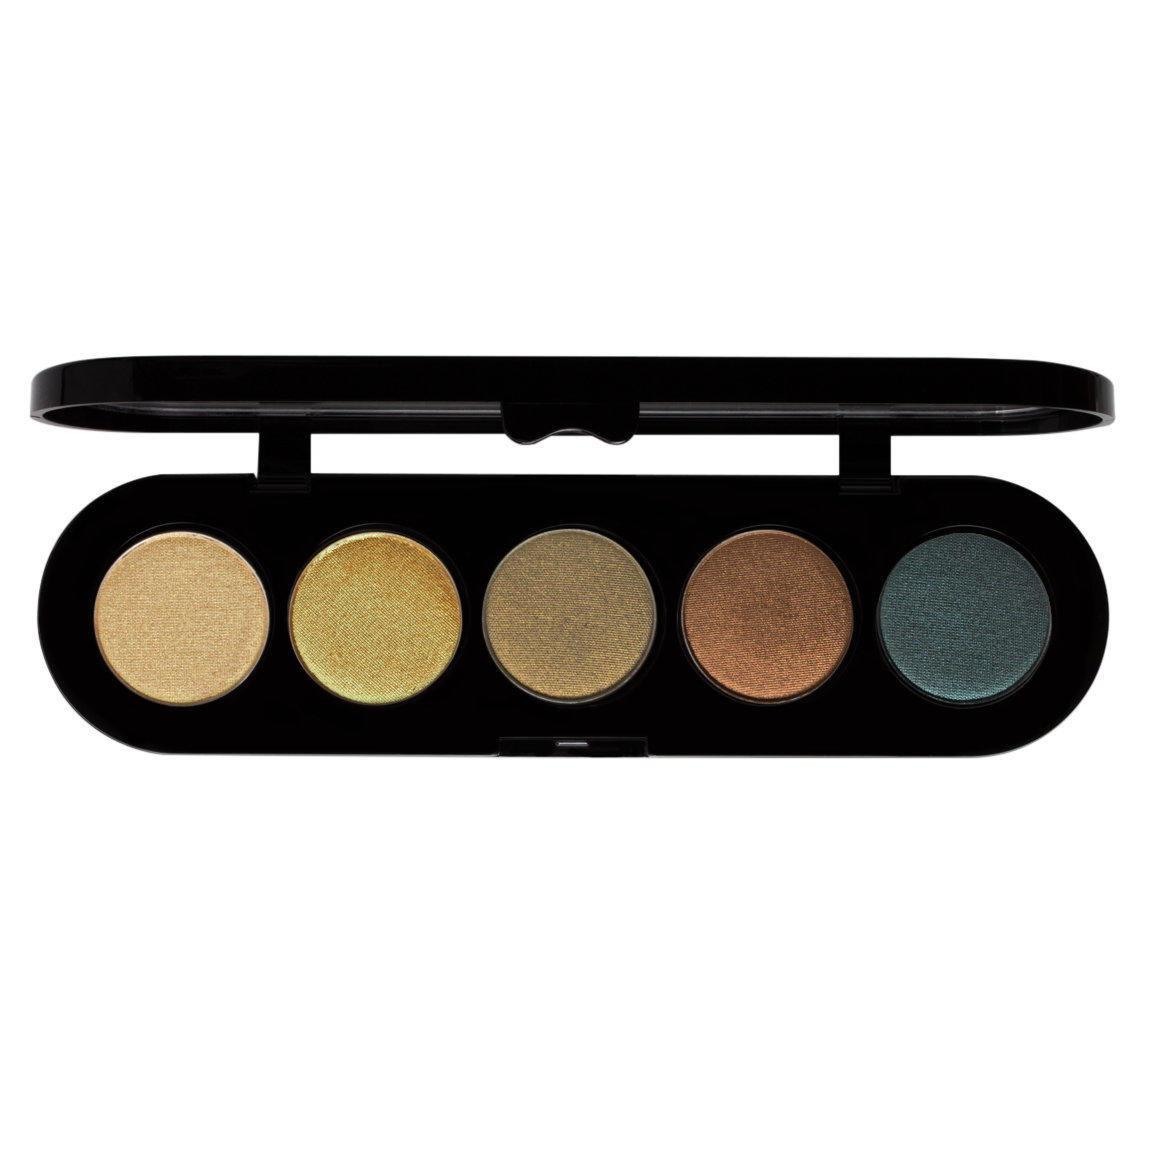 Makeup Atelier Eyeshadow Palette Amazon Tones T18